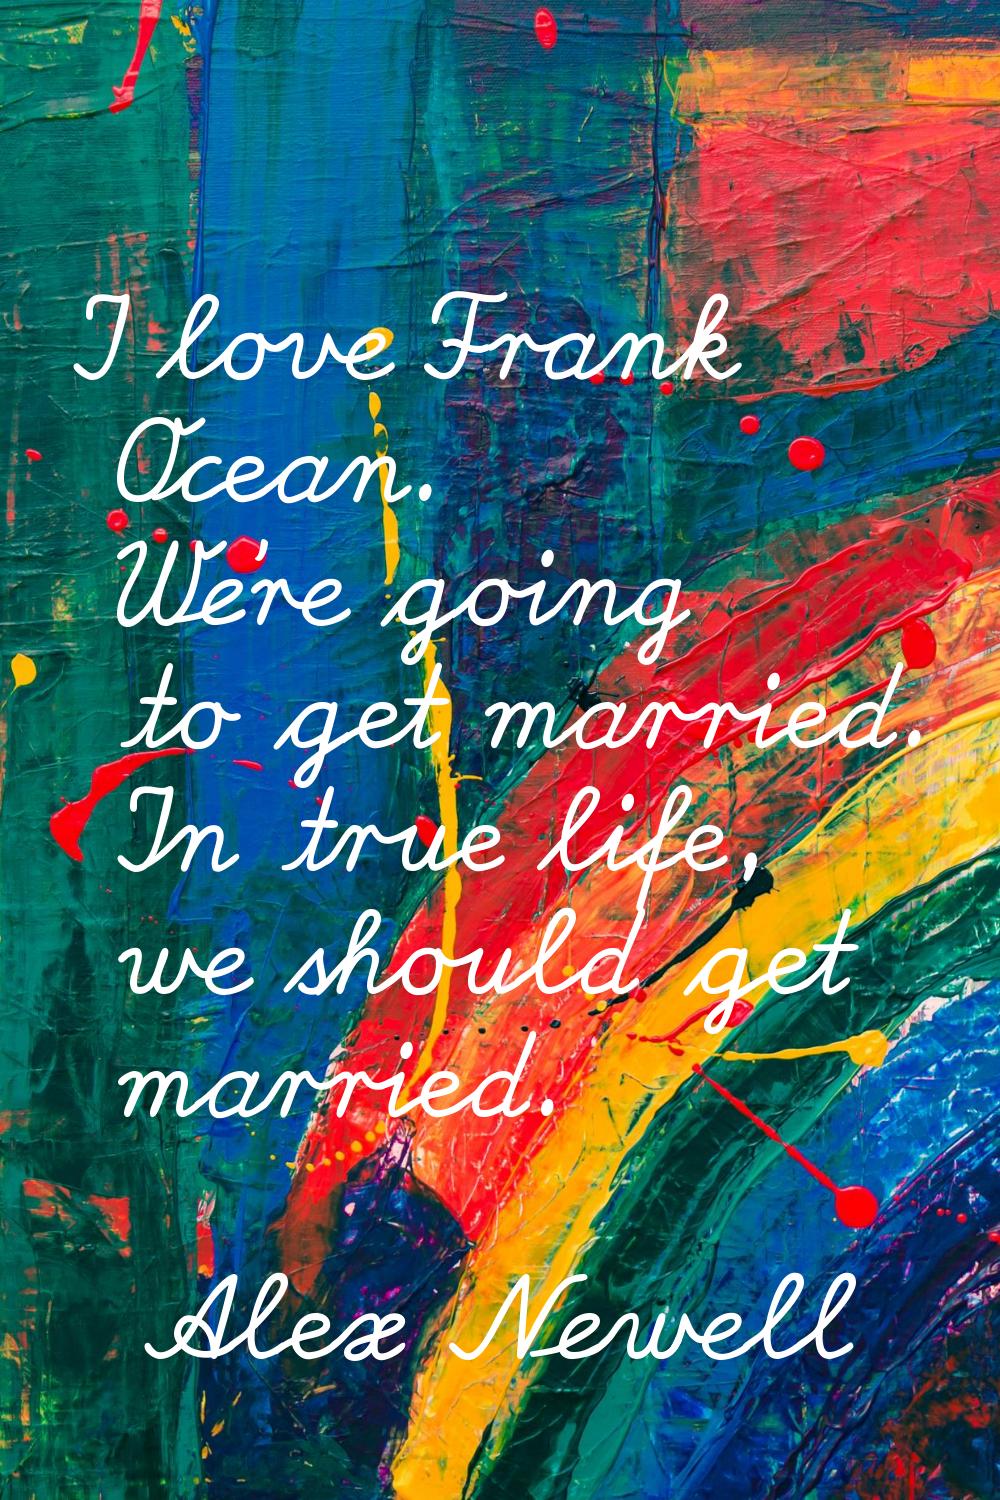 I love Frank Ocean. We're going to get married. In true life, we should get married.